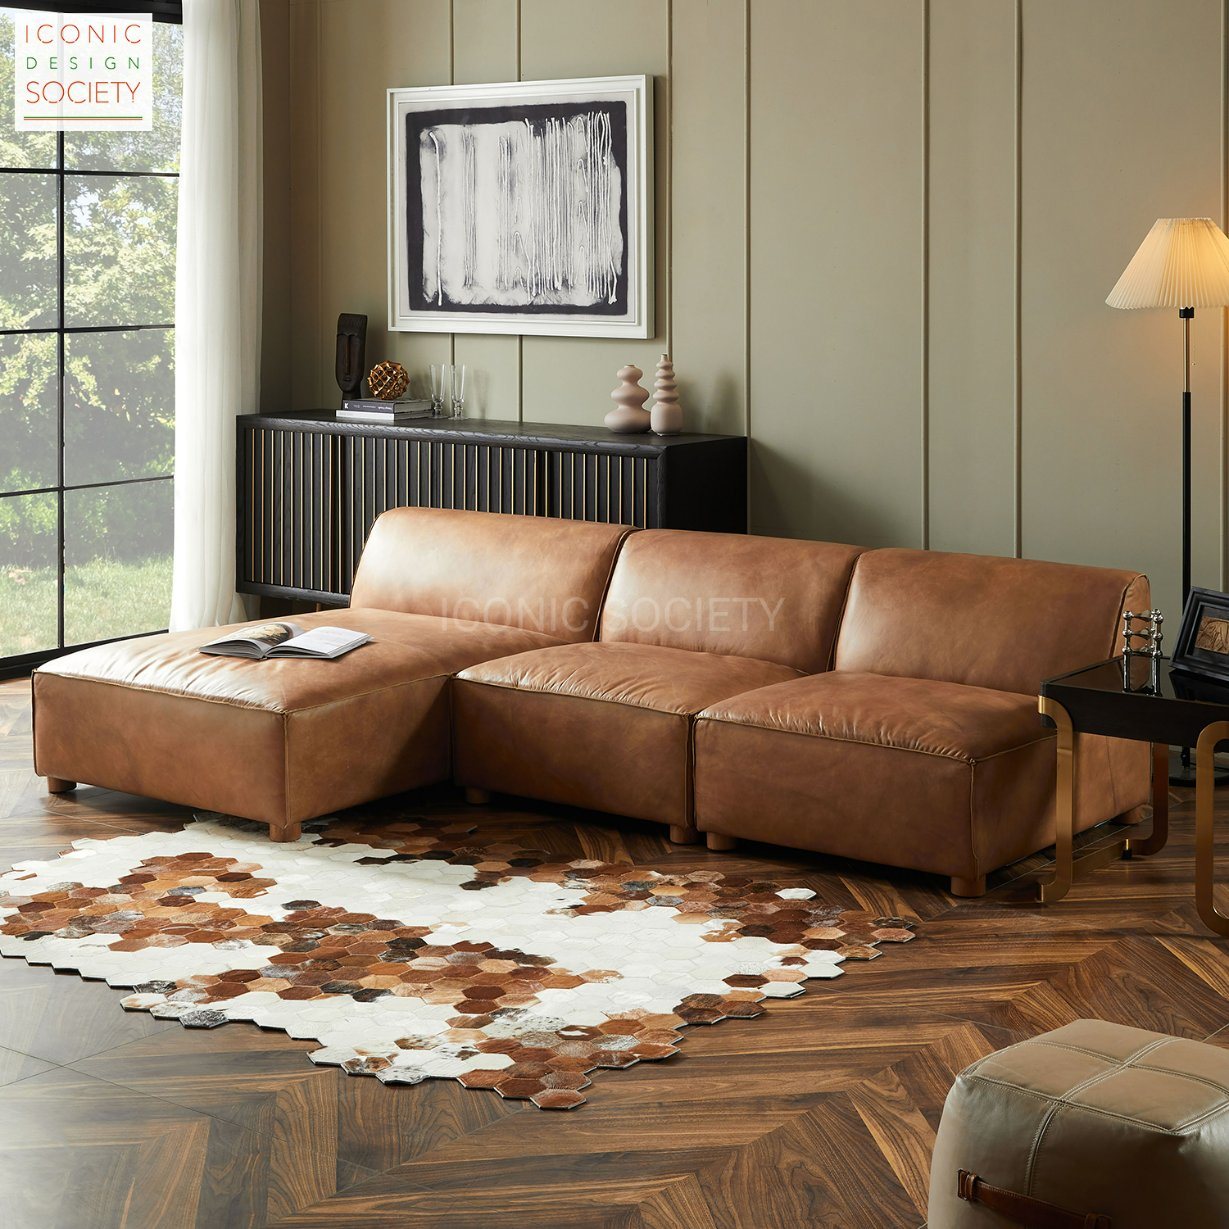 Elegant leather sectional sofa in modern living room.